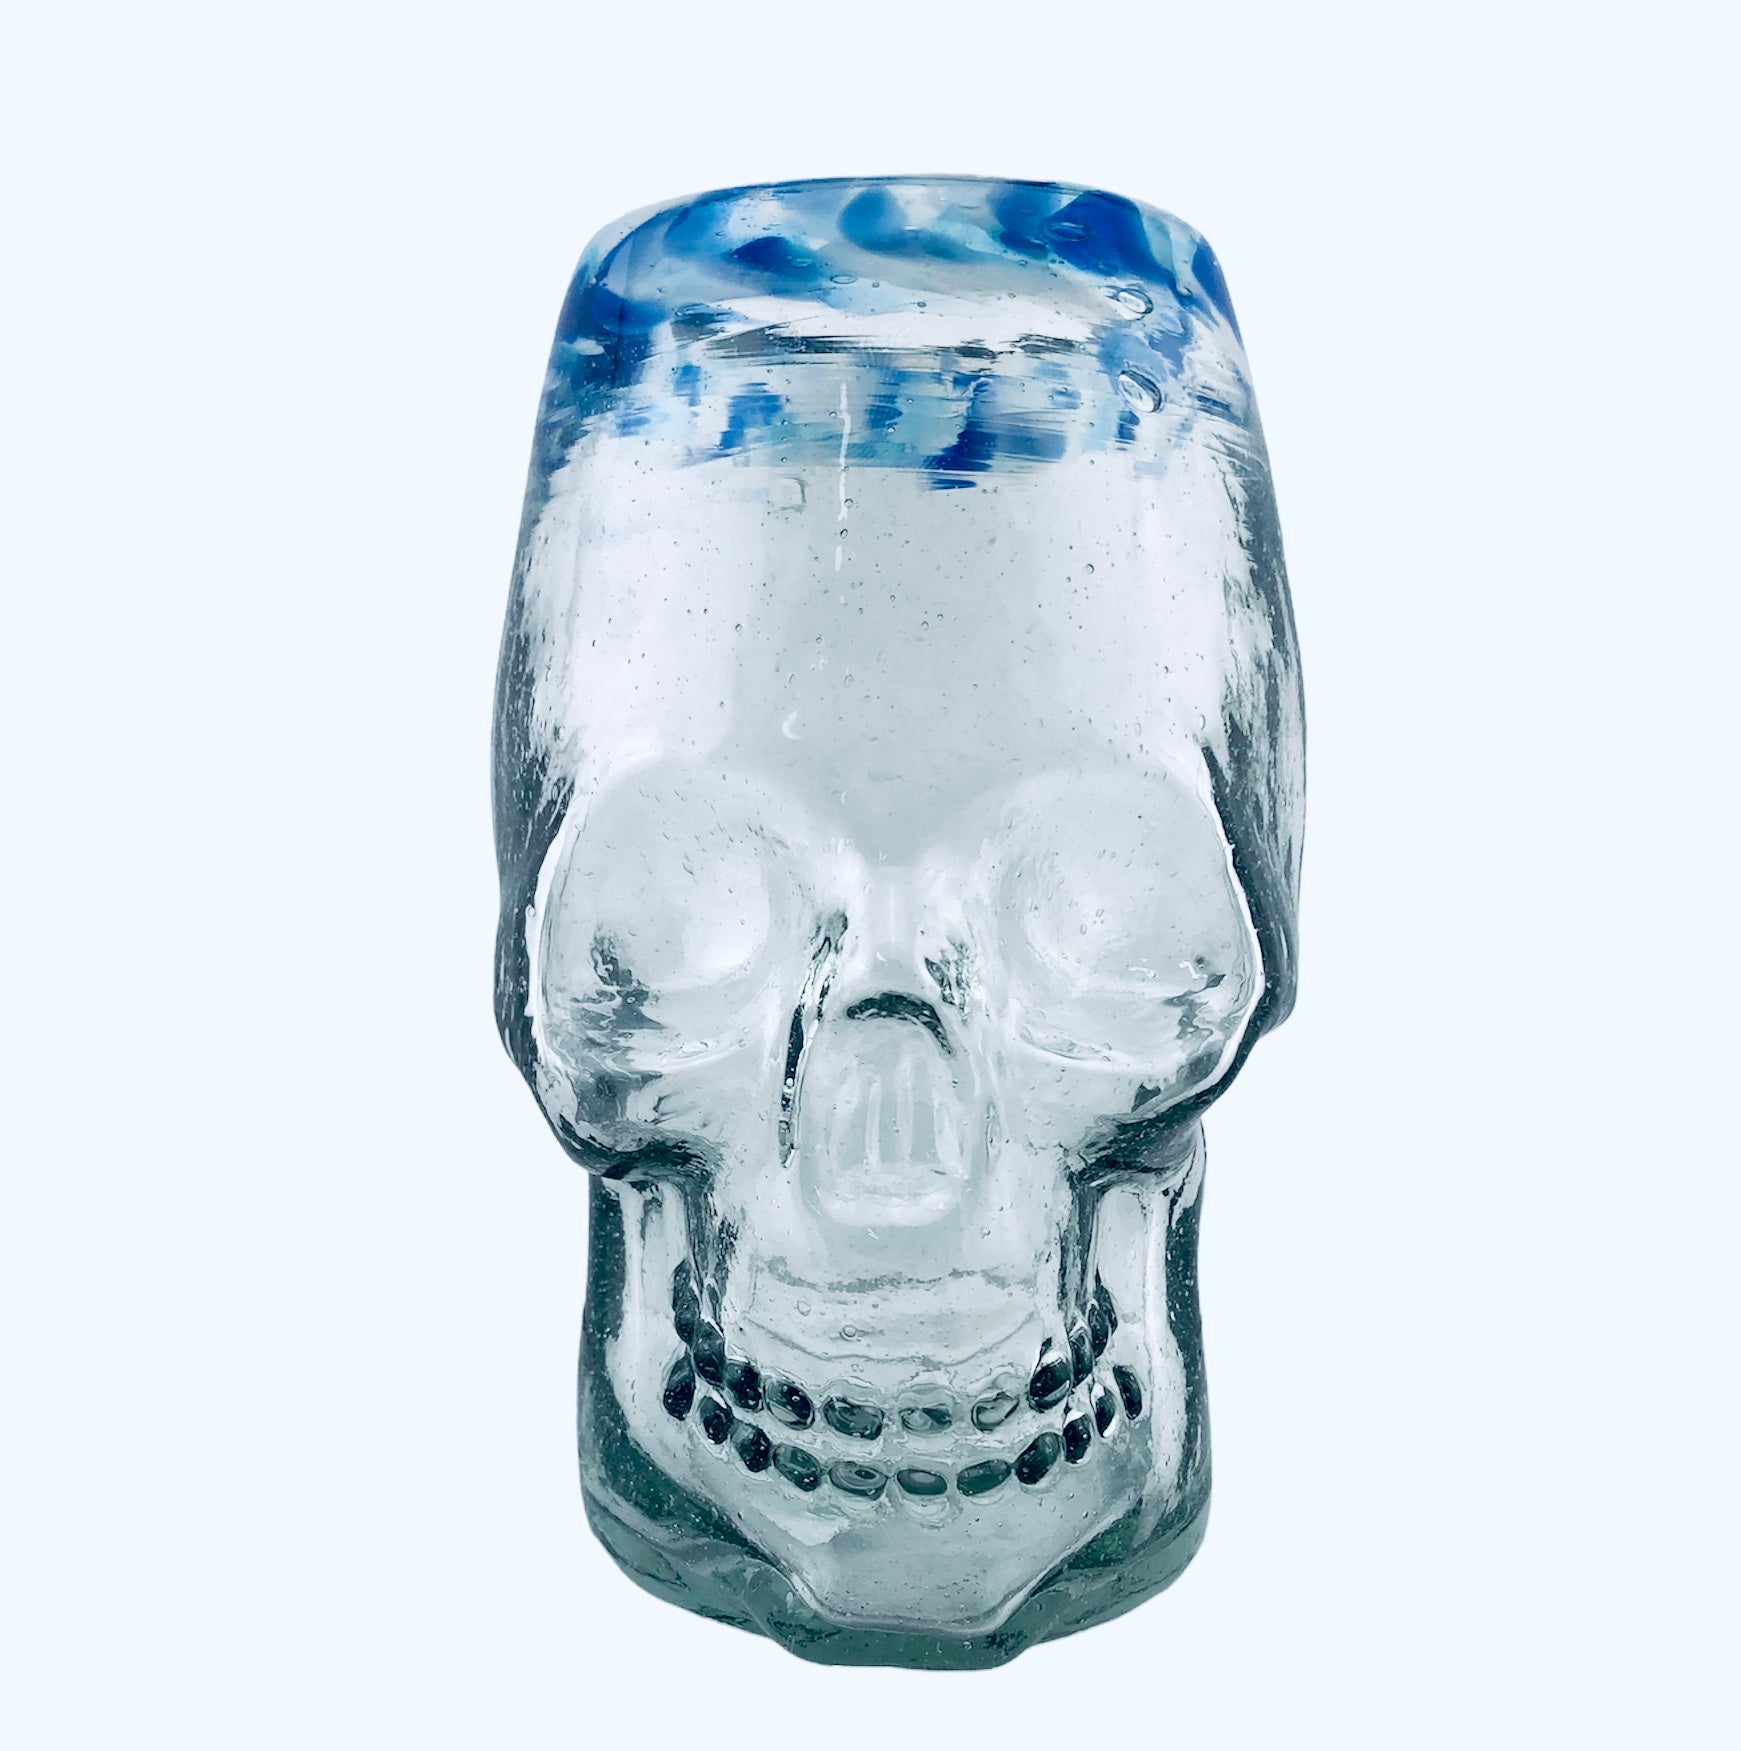 Handmade Mexican Calavera Skull Glass - blue and white rim